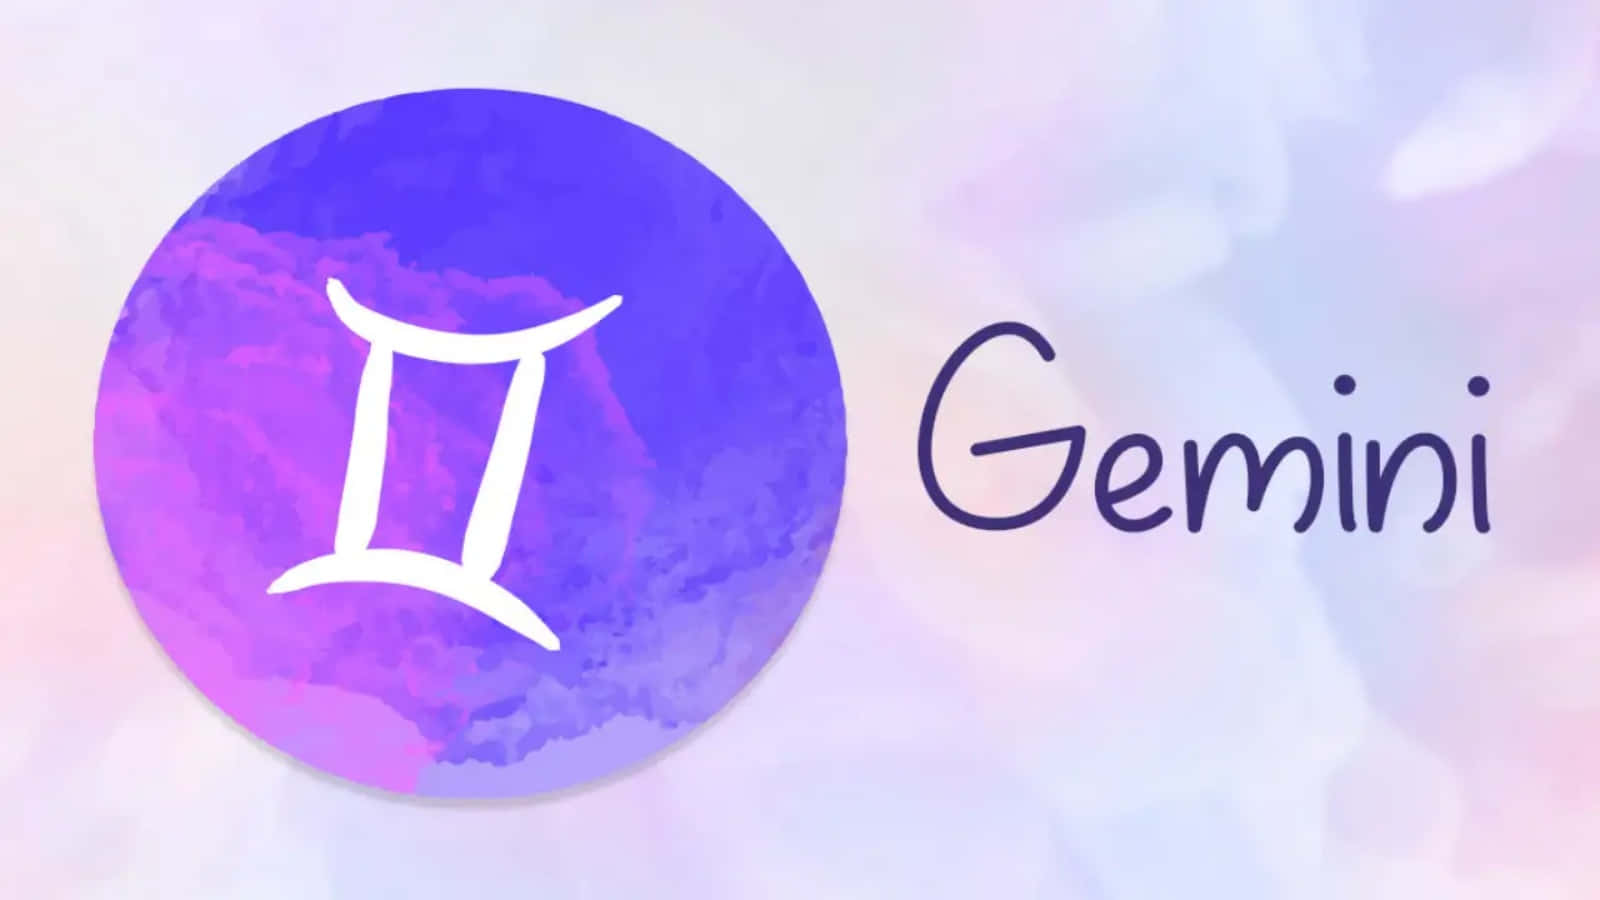 A celestial representation of Gemini.